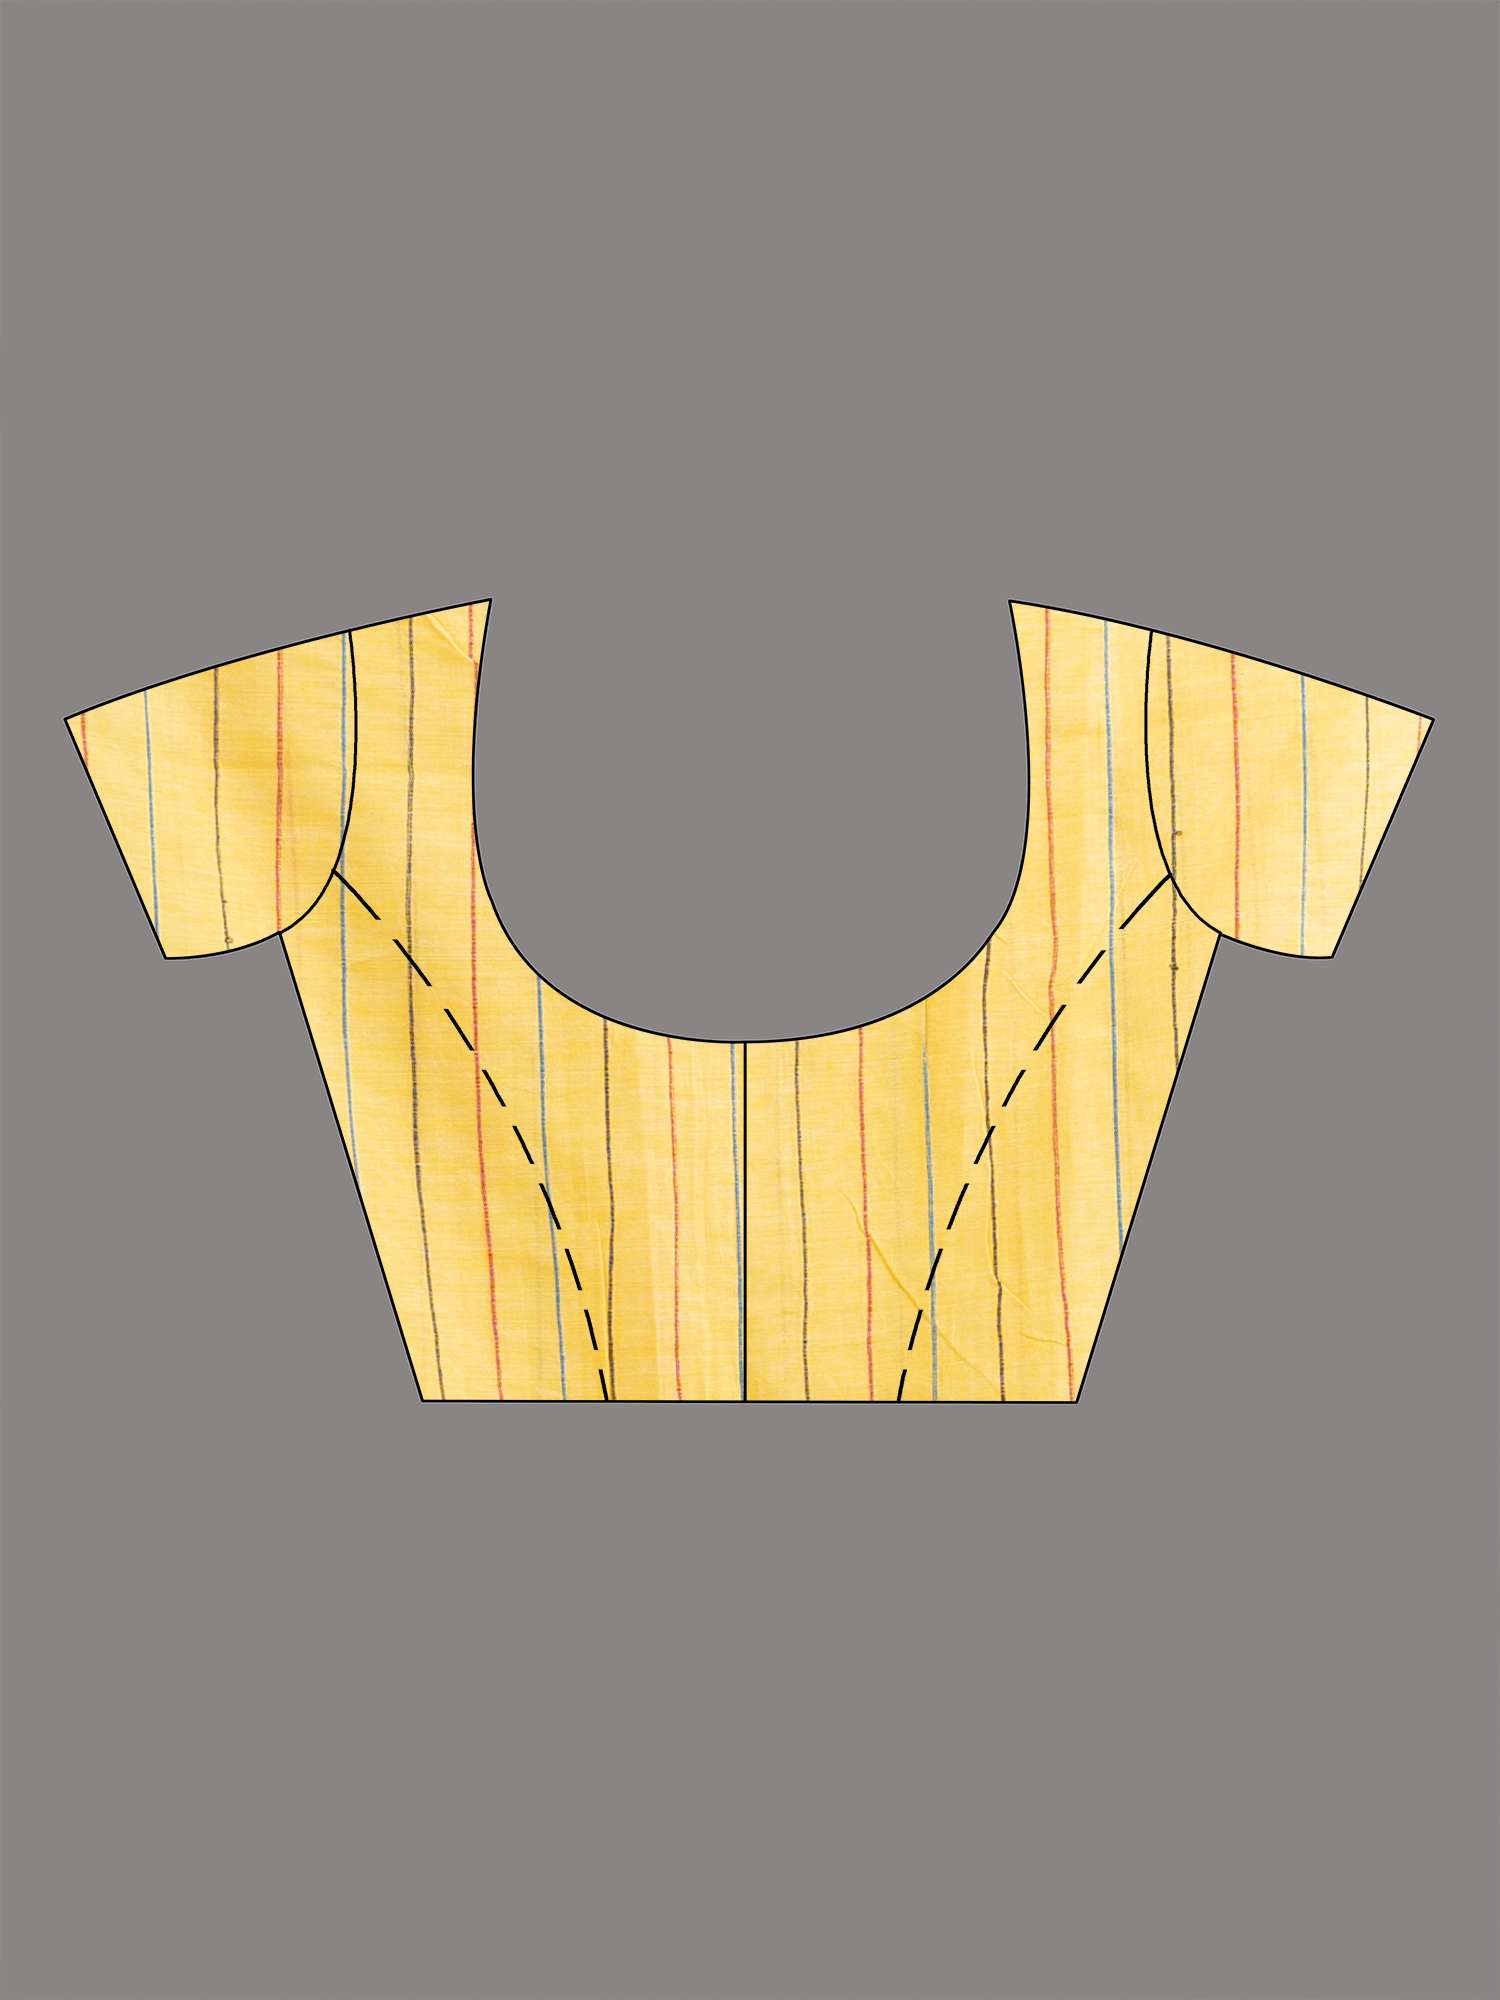 Women's Yellow cotton saree with multi colour thread weave and tassels - Angoshobha